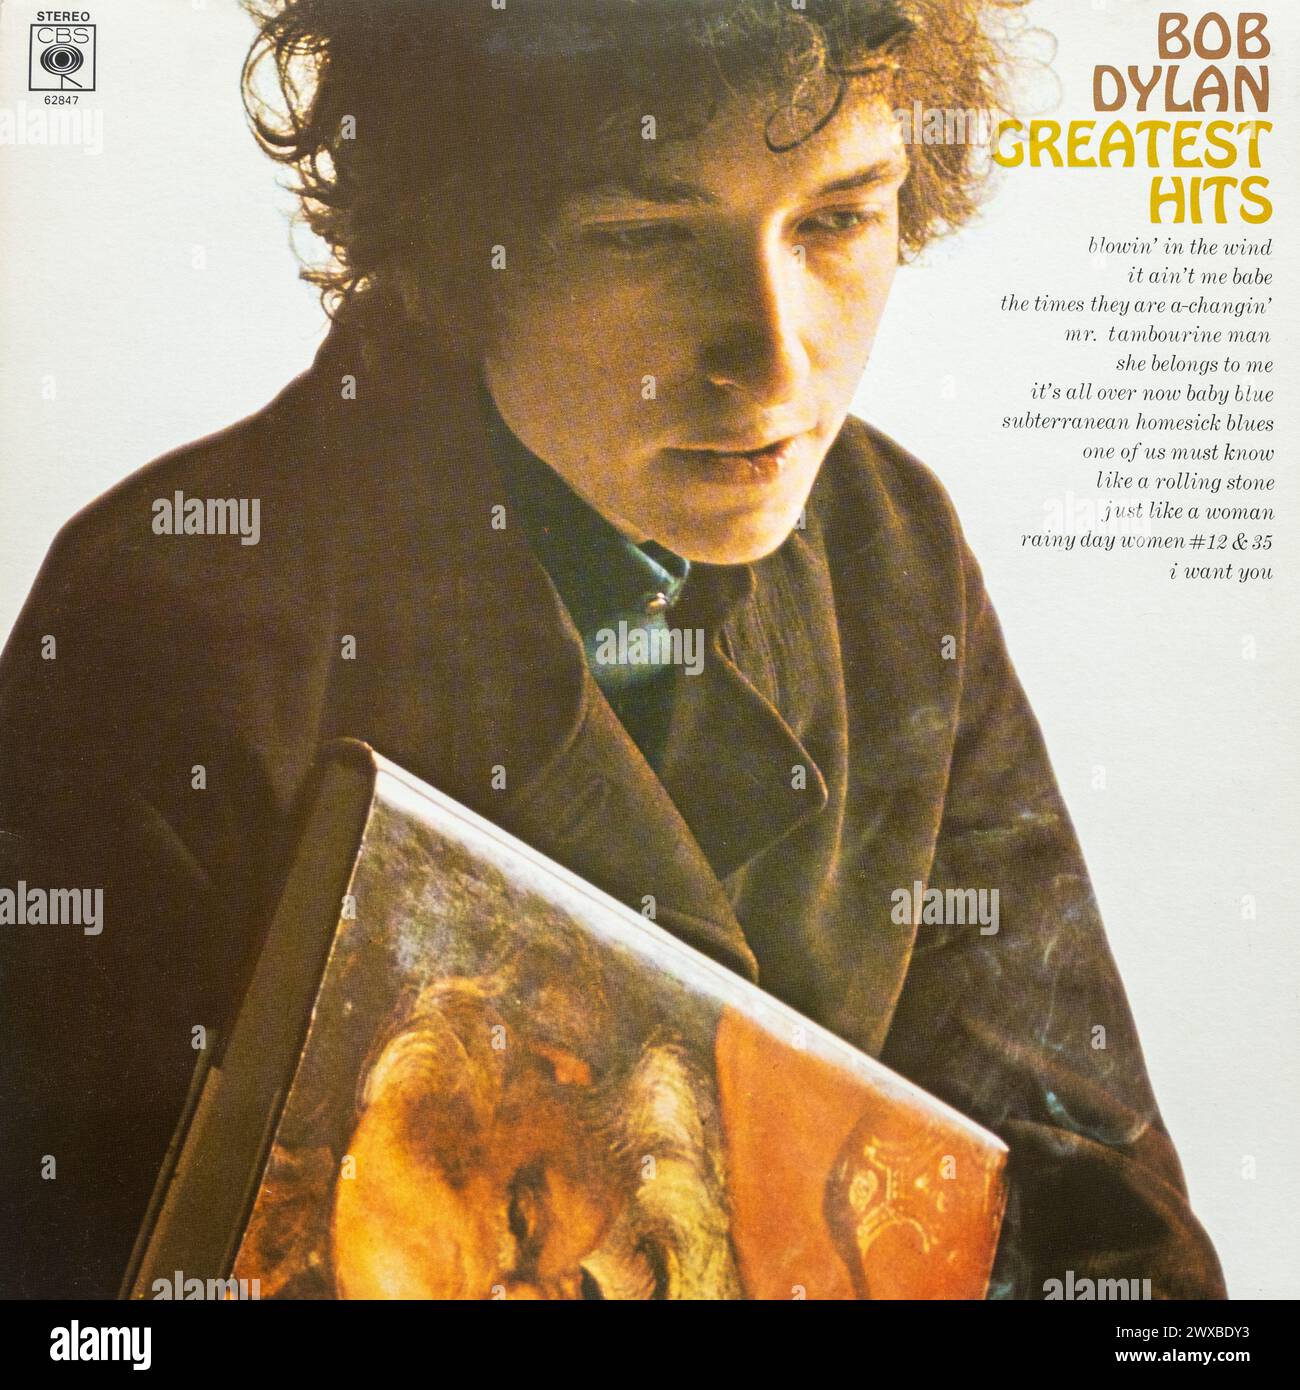 Bob Dylan Greatest Hits Album des amerikanischen Singer-Songwriters, Vinyl-LP-Cover Stockfoto